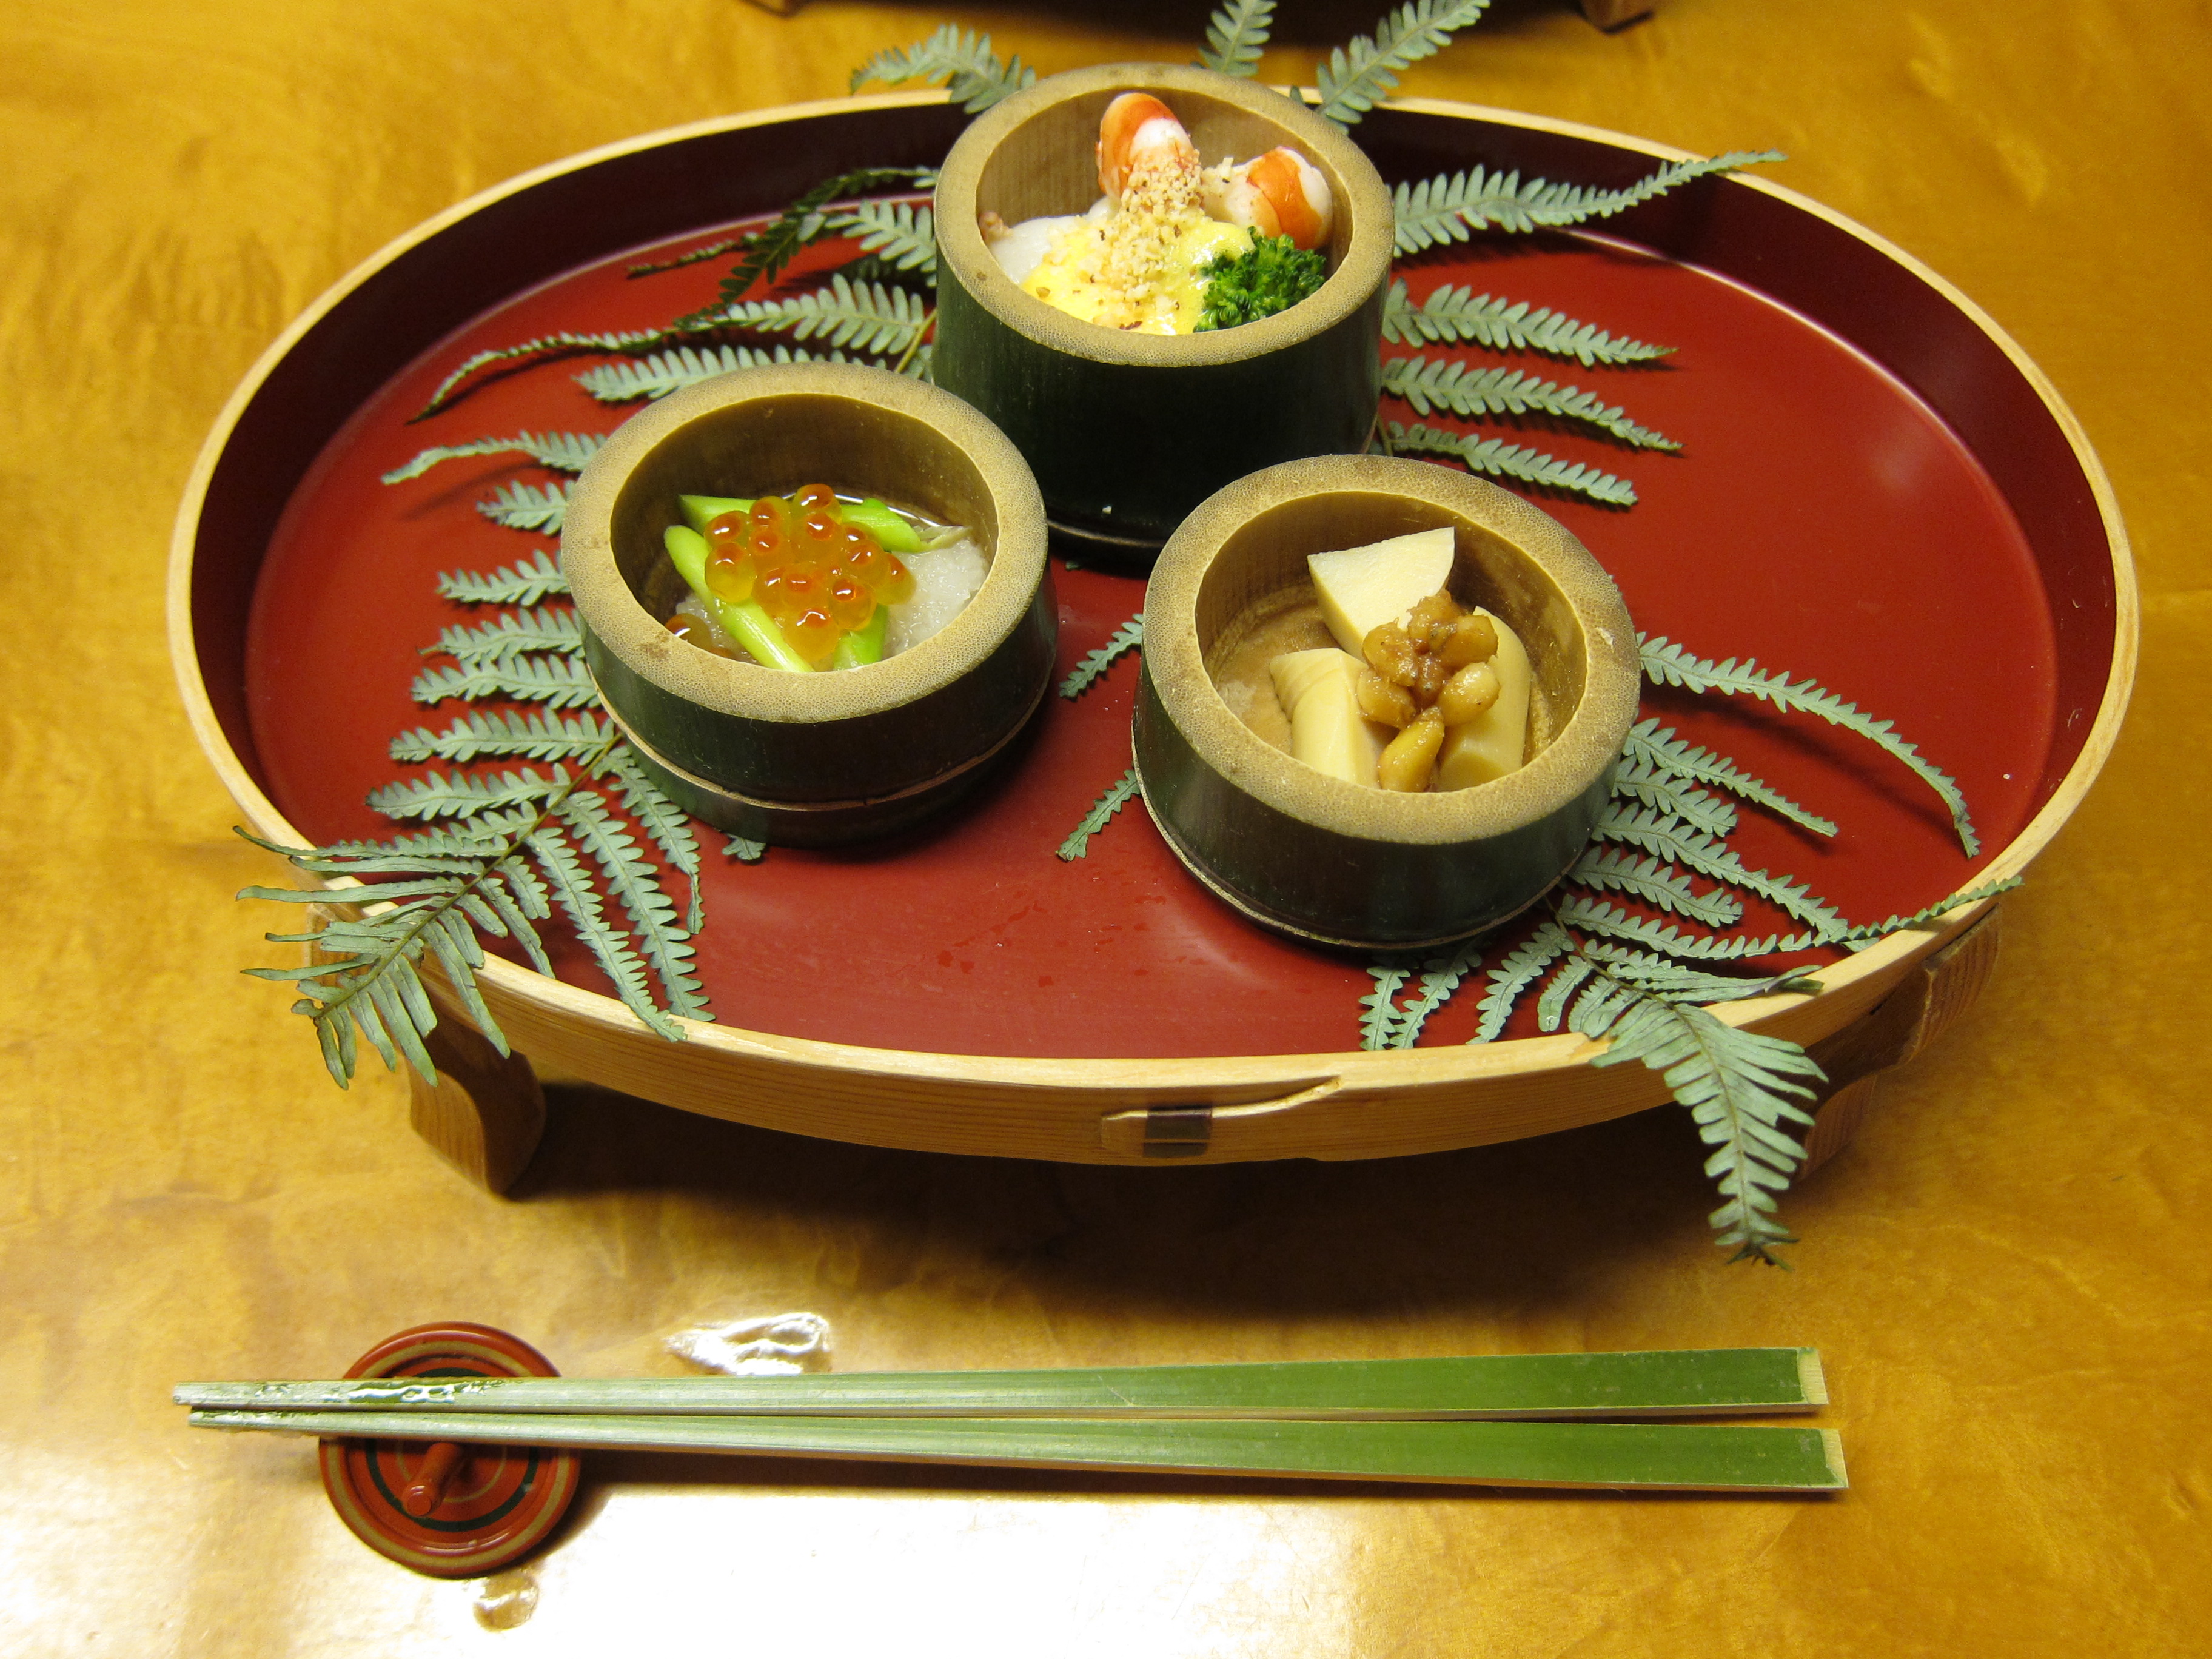 "Japanese cuisine